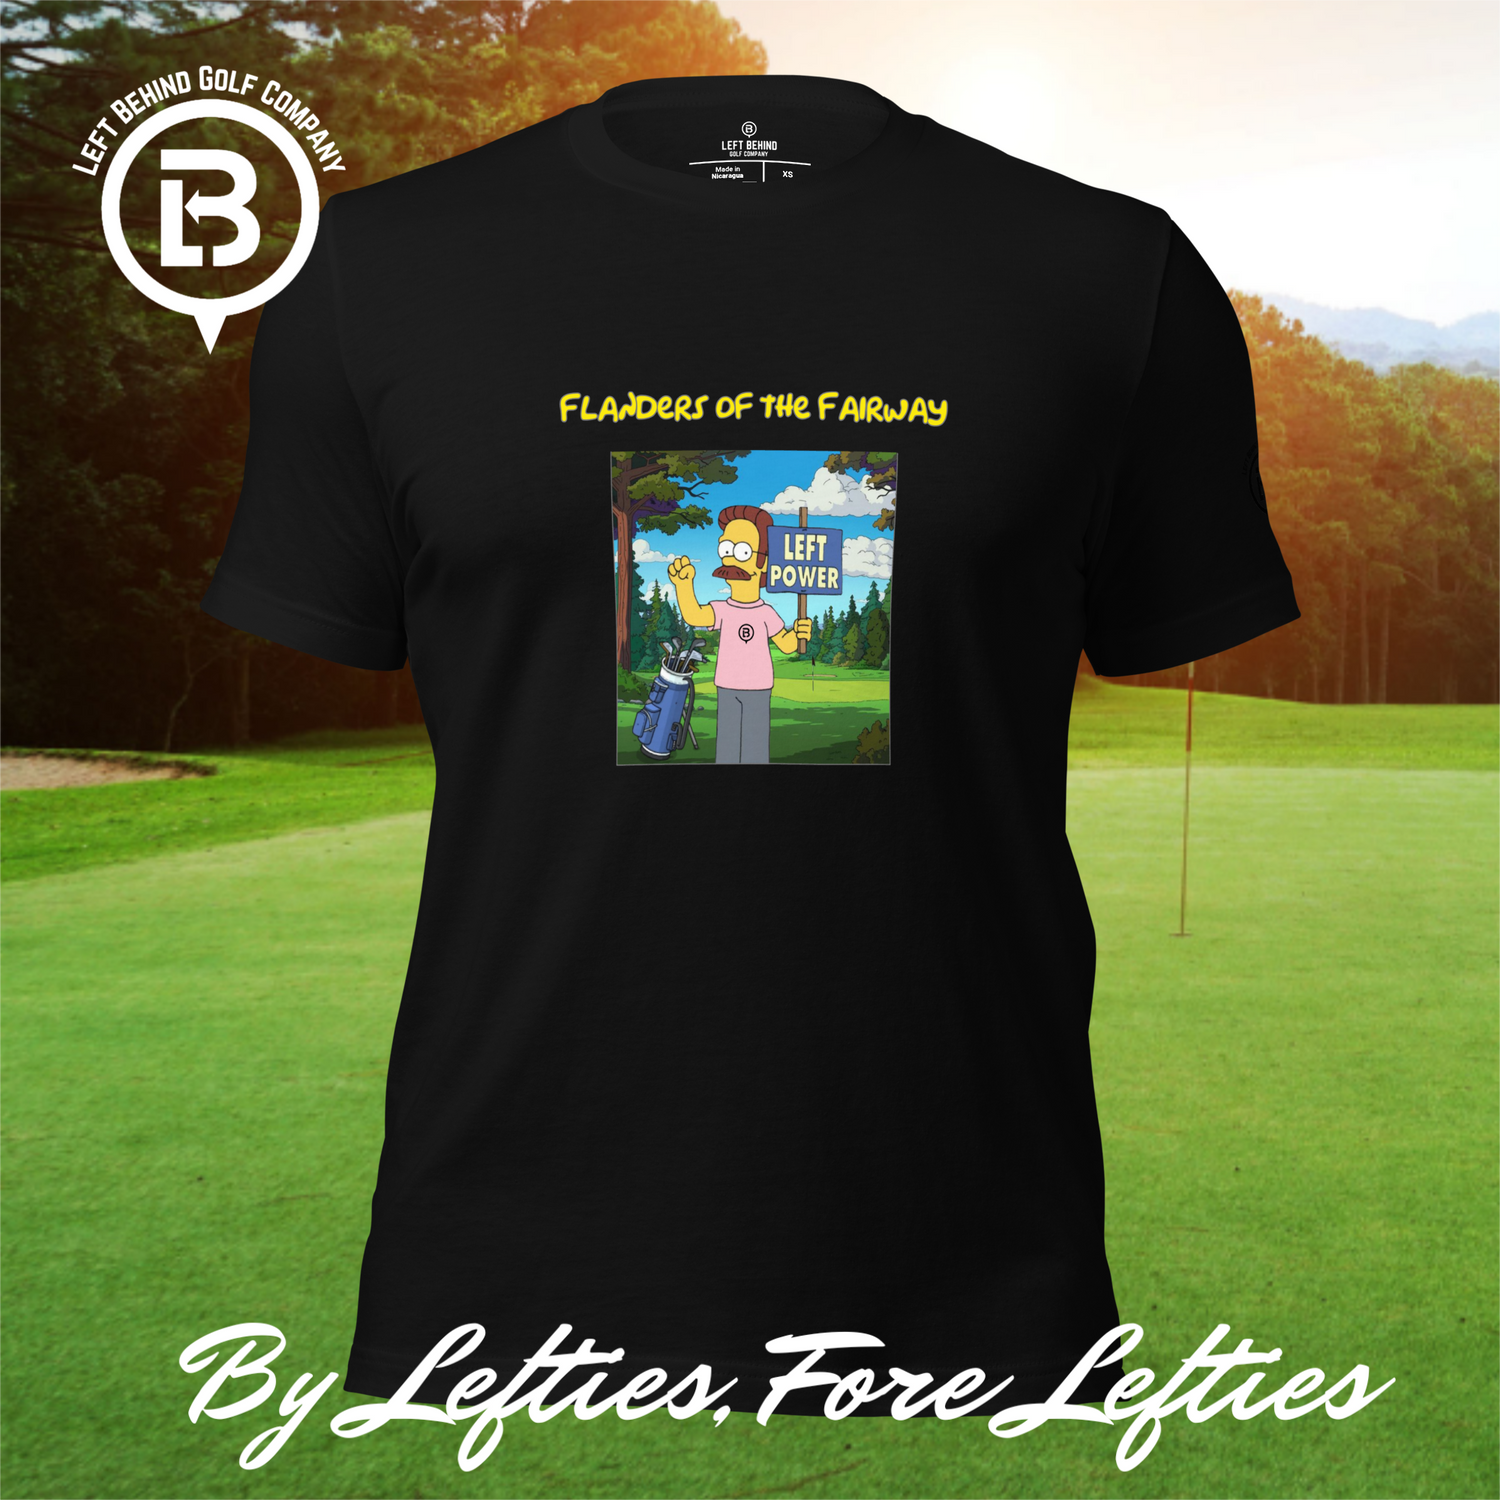 Flanders of the Fairway T-Shirt  Golf-themed apparel  Golf enthusiast shirt  Golf fashion  Golf course attire  Golf lover gift  Golfing tee  Unique golf shirt  Golfer&